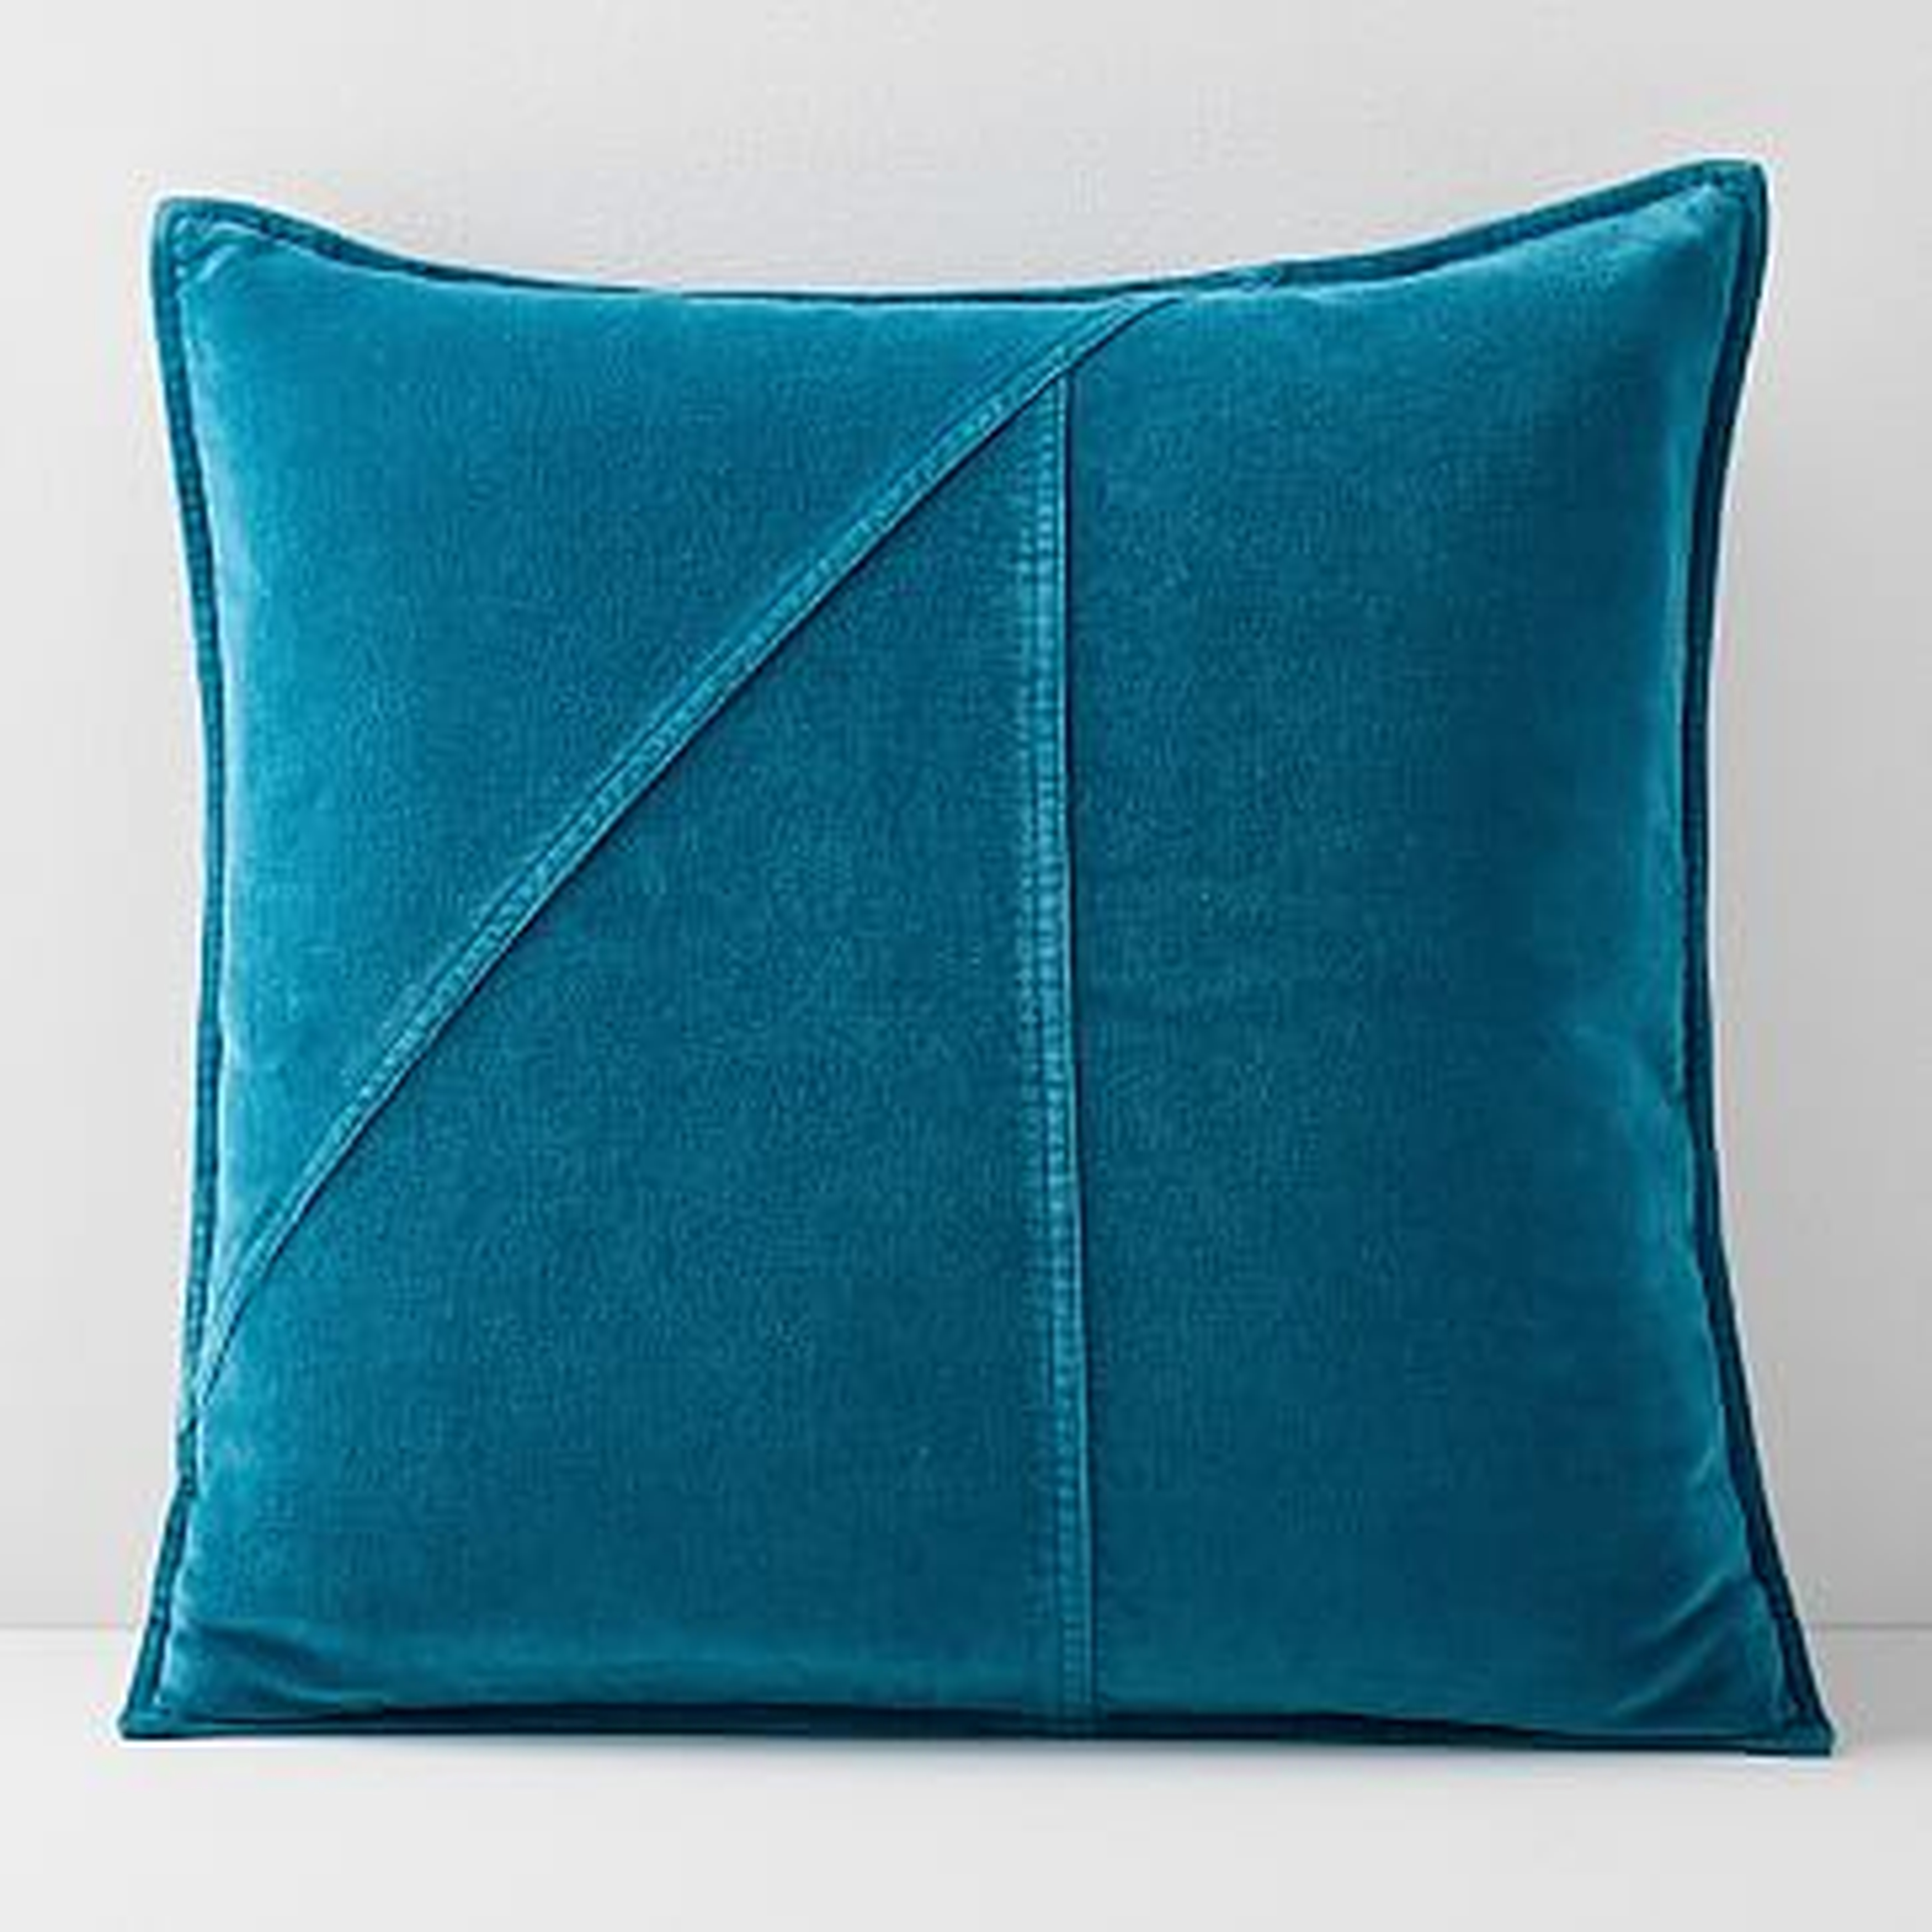 Washed Cotton Velvet Pillow Cover, Blue Teal, 18"x18" - West Elm